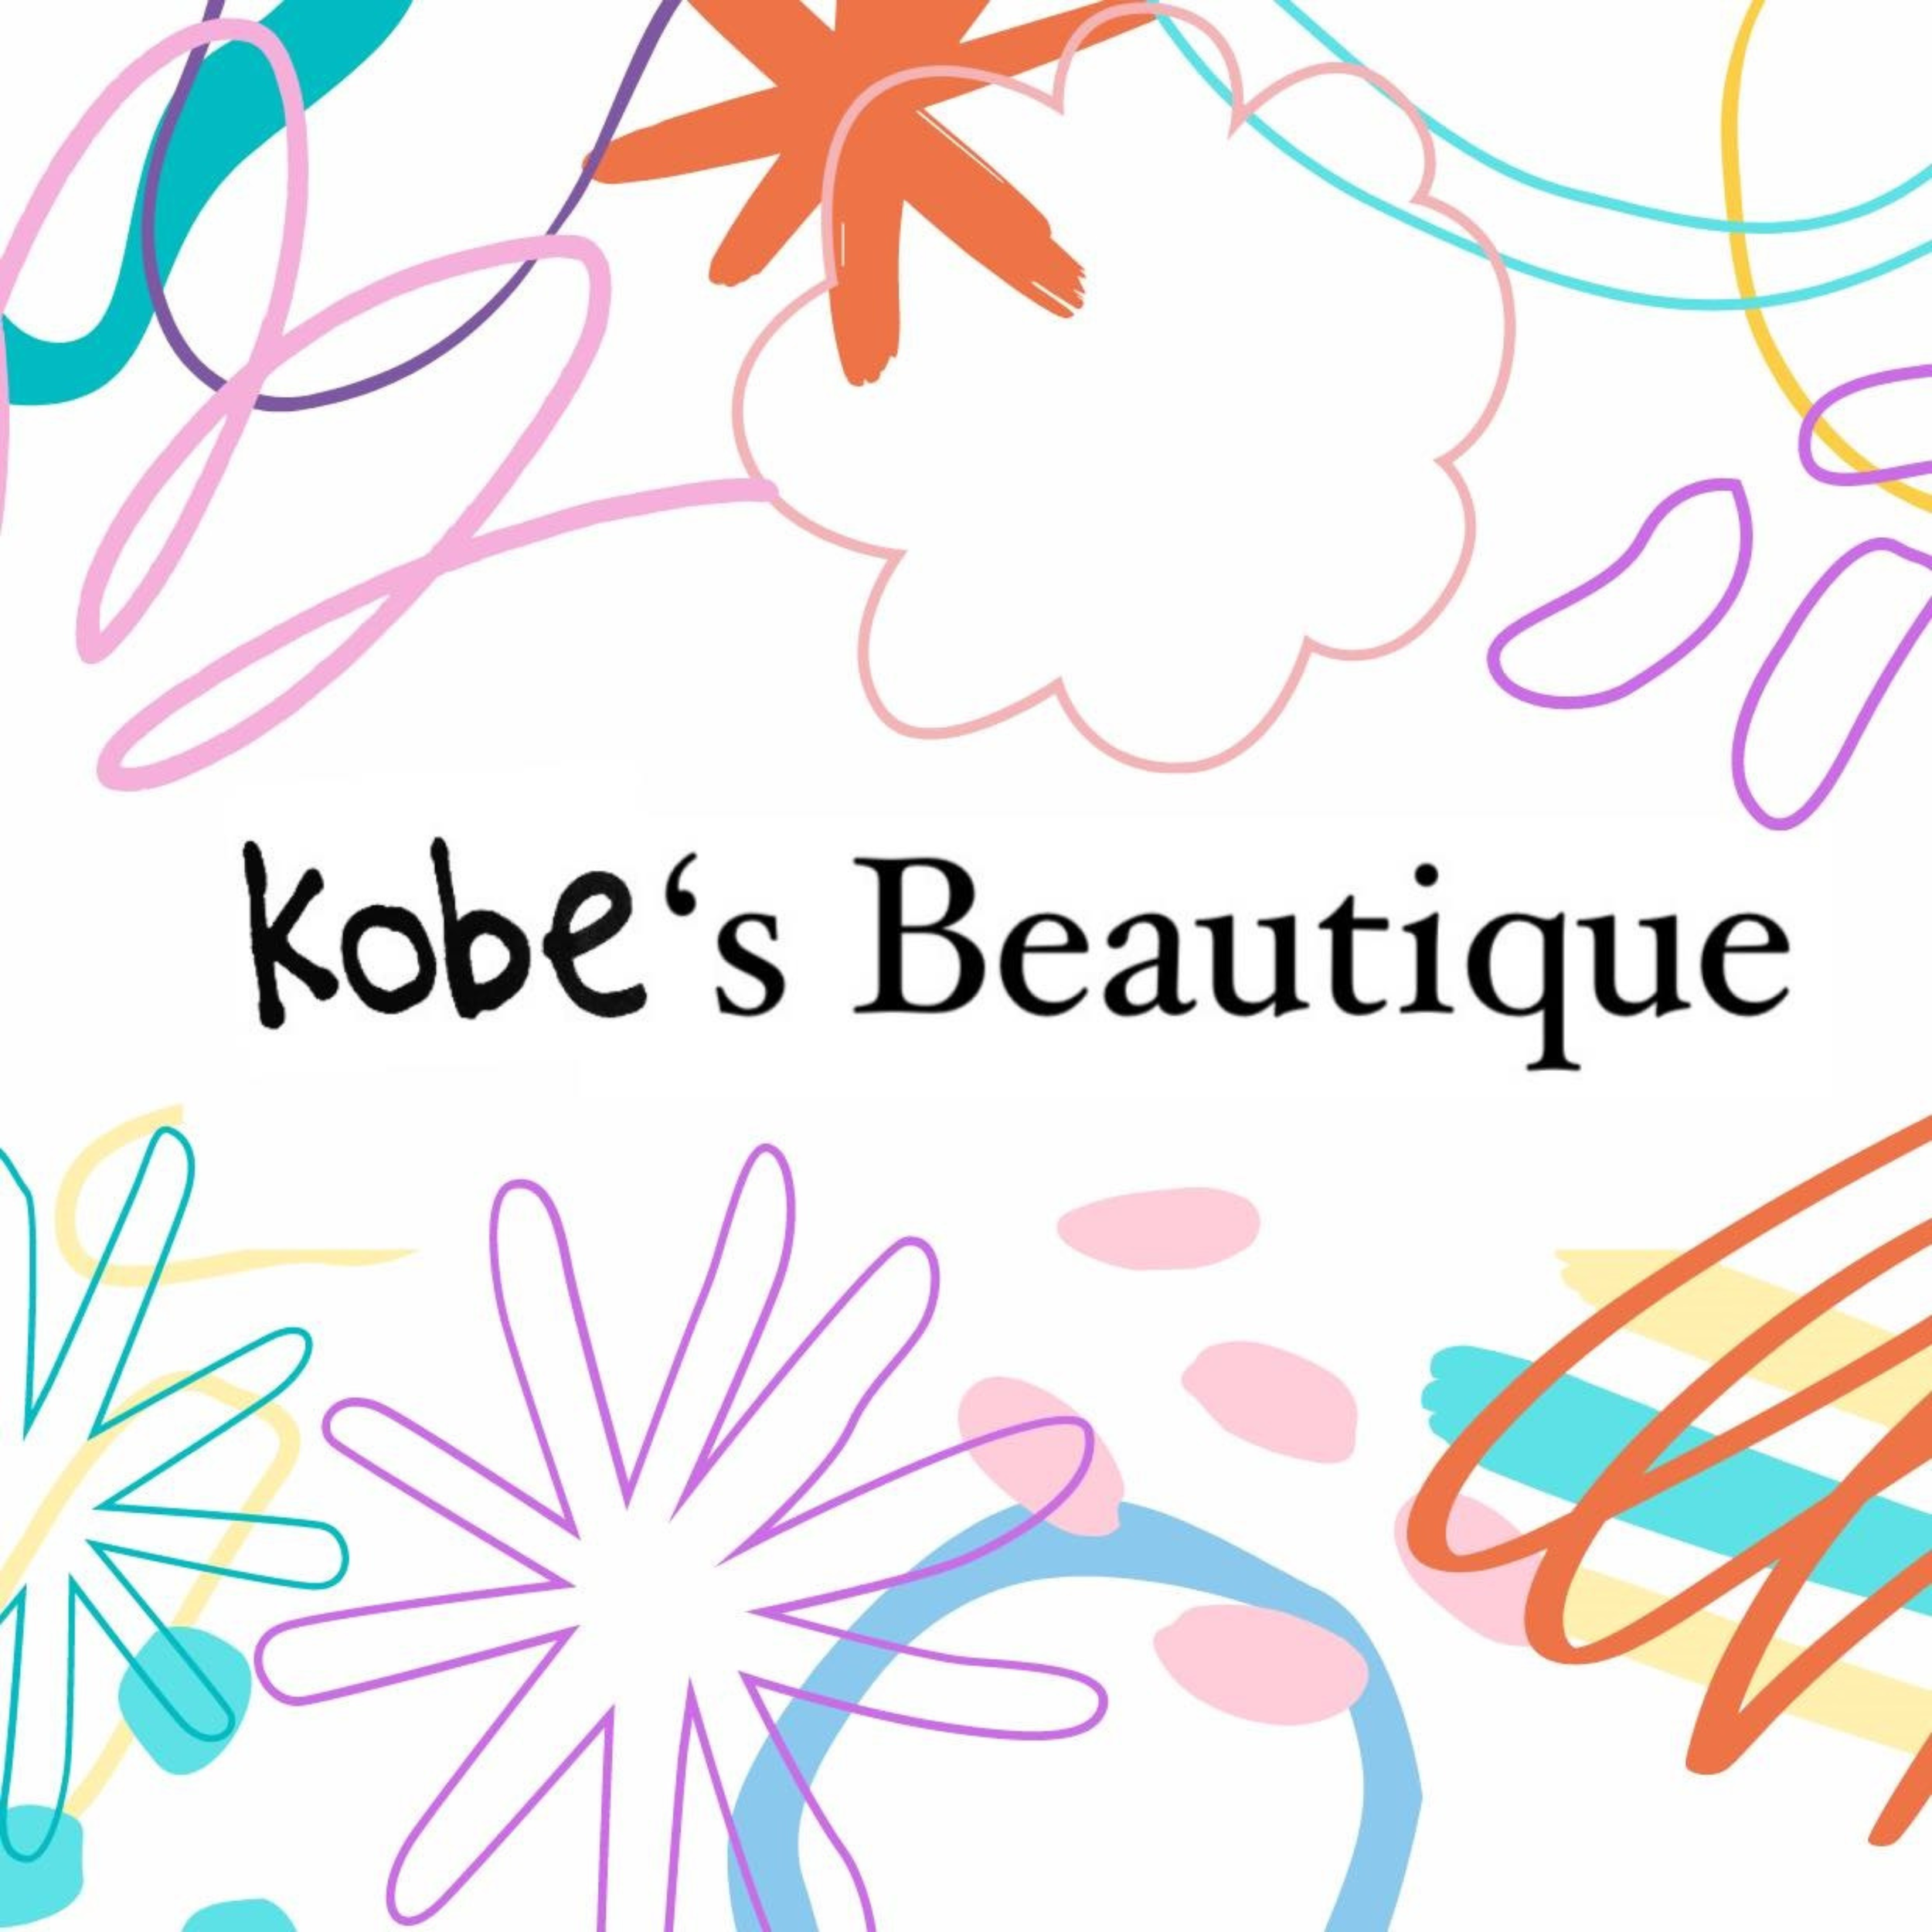 Kobe's Beautique